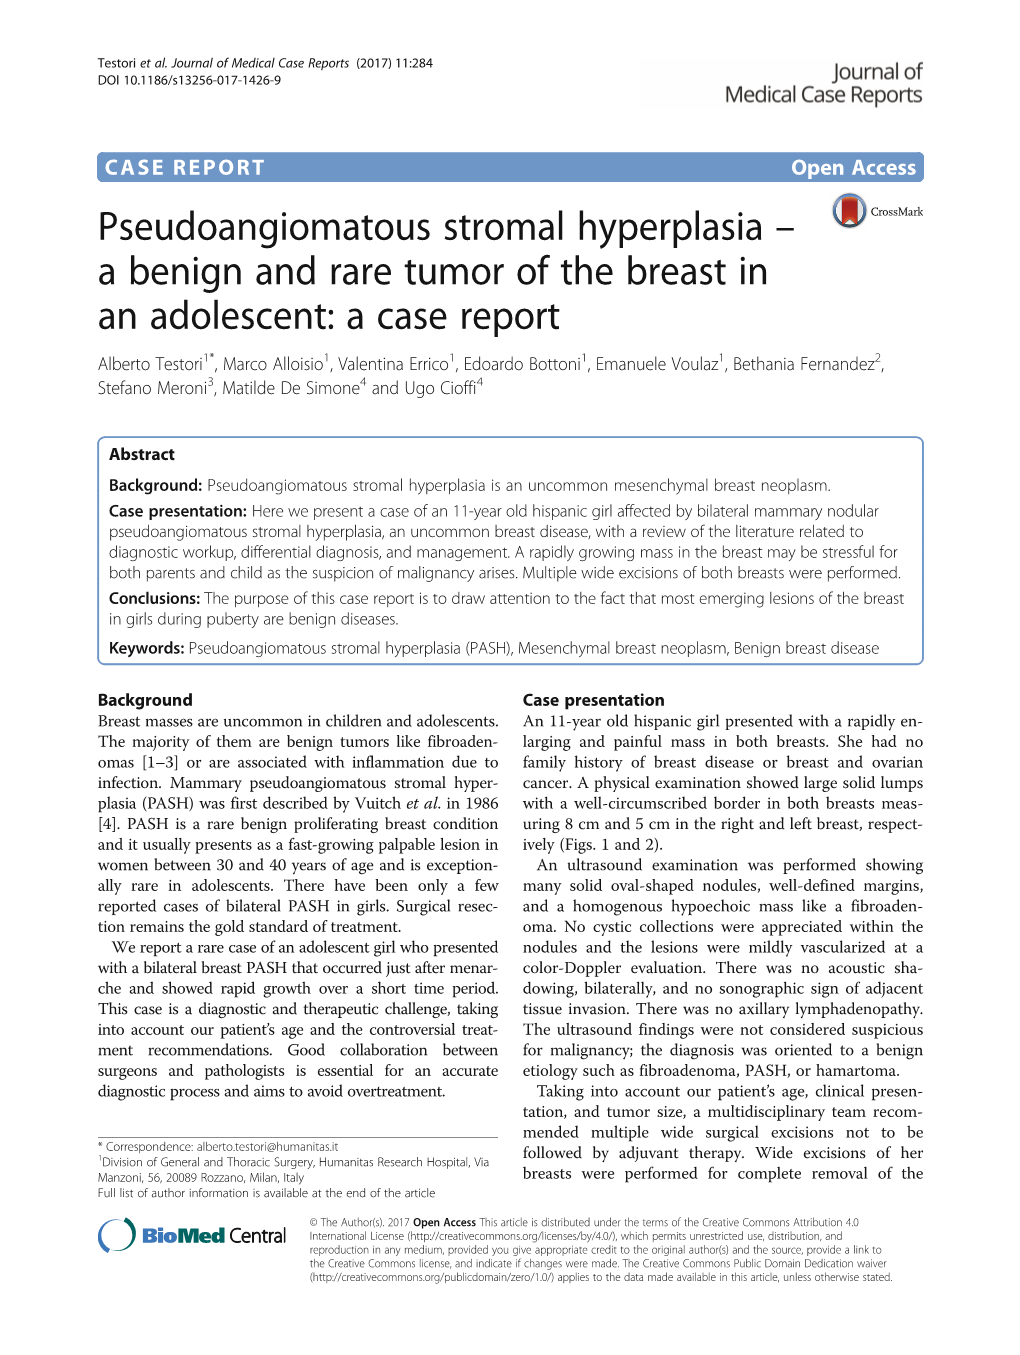 Pseudoangiomatous Stromal Hyperplasia